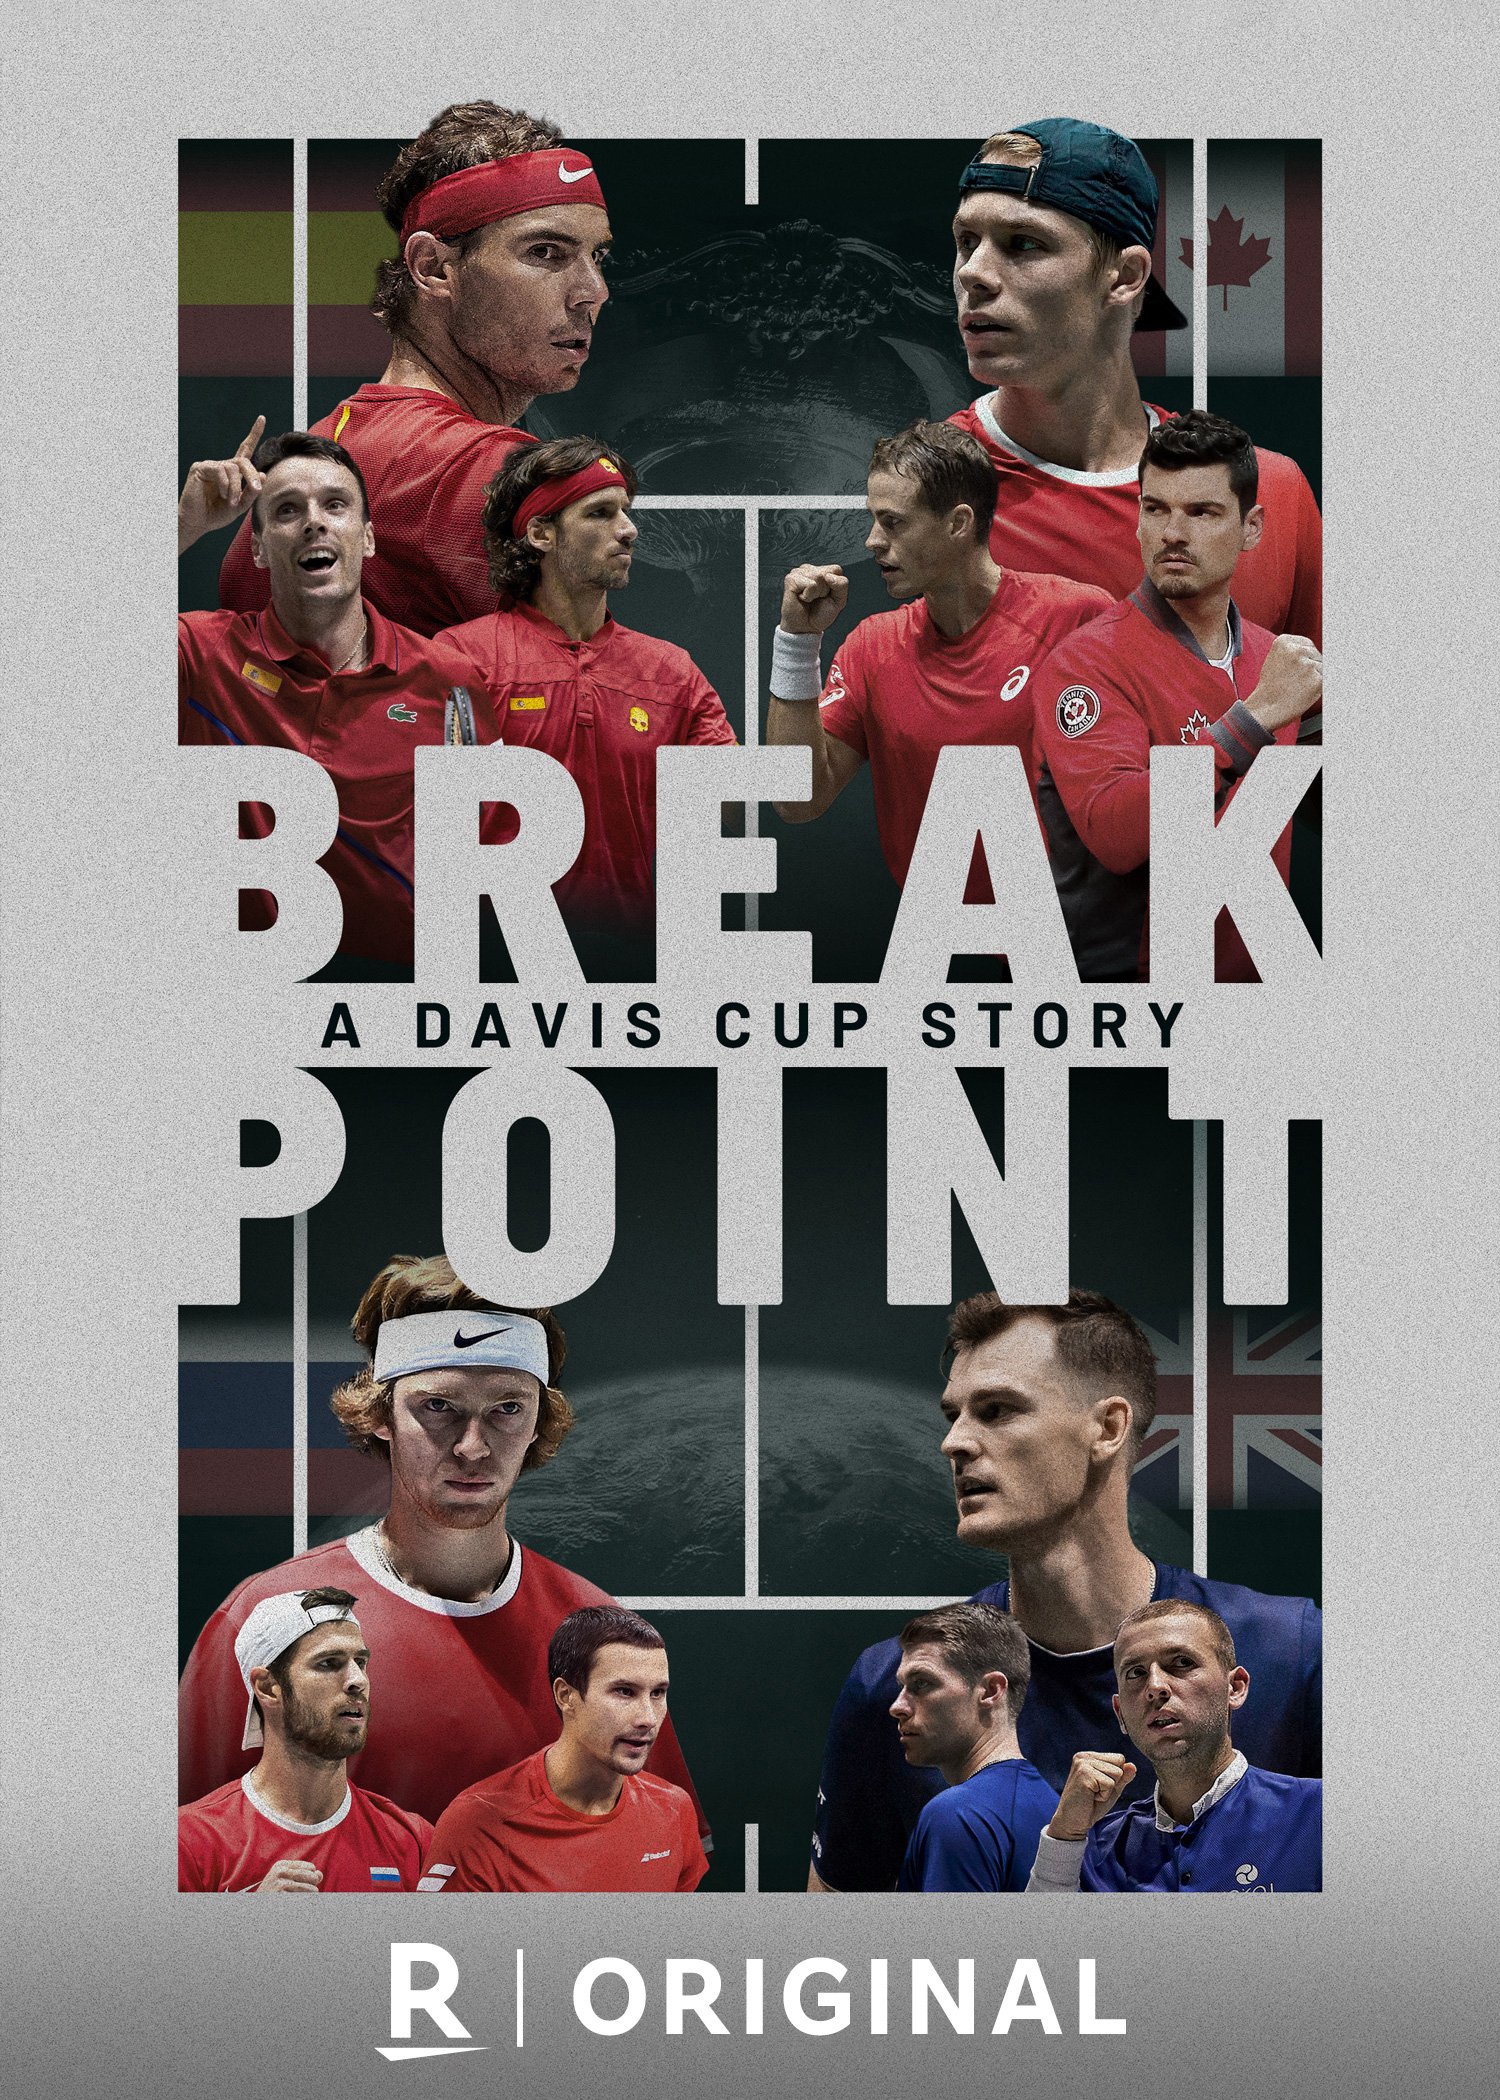 Break Point: Part 1, Official Trailer